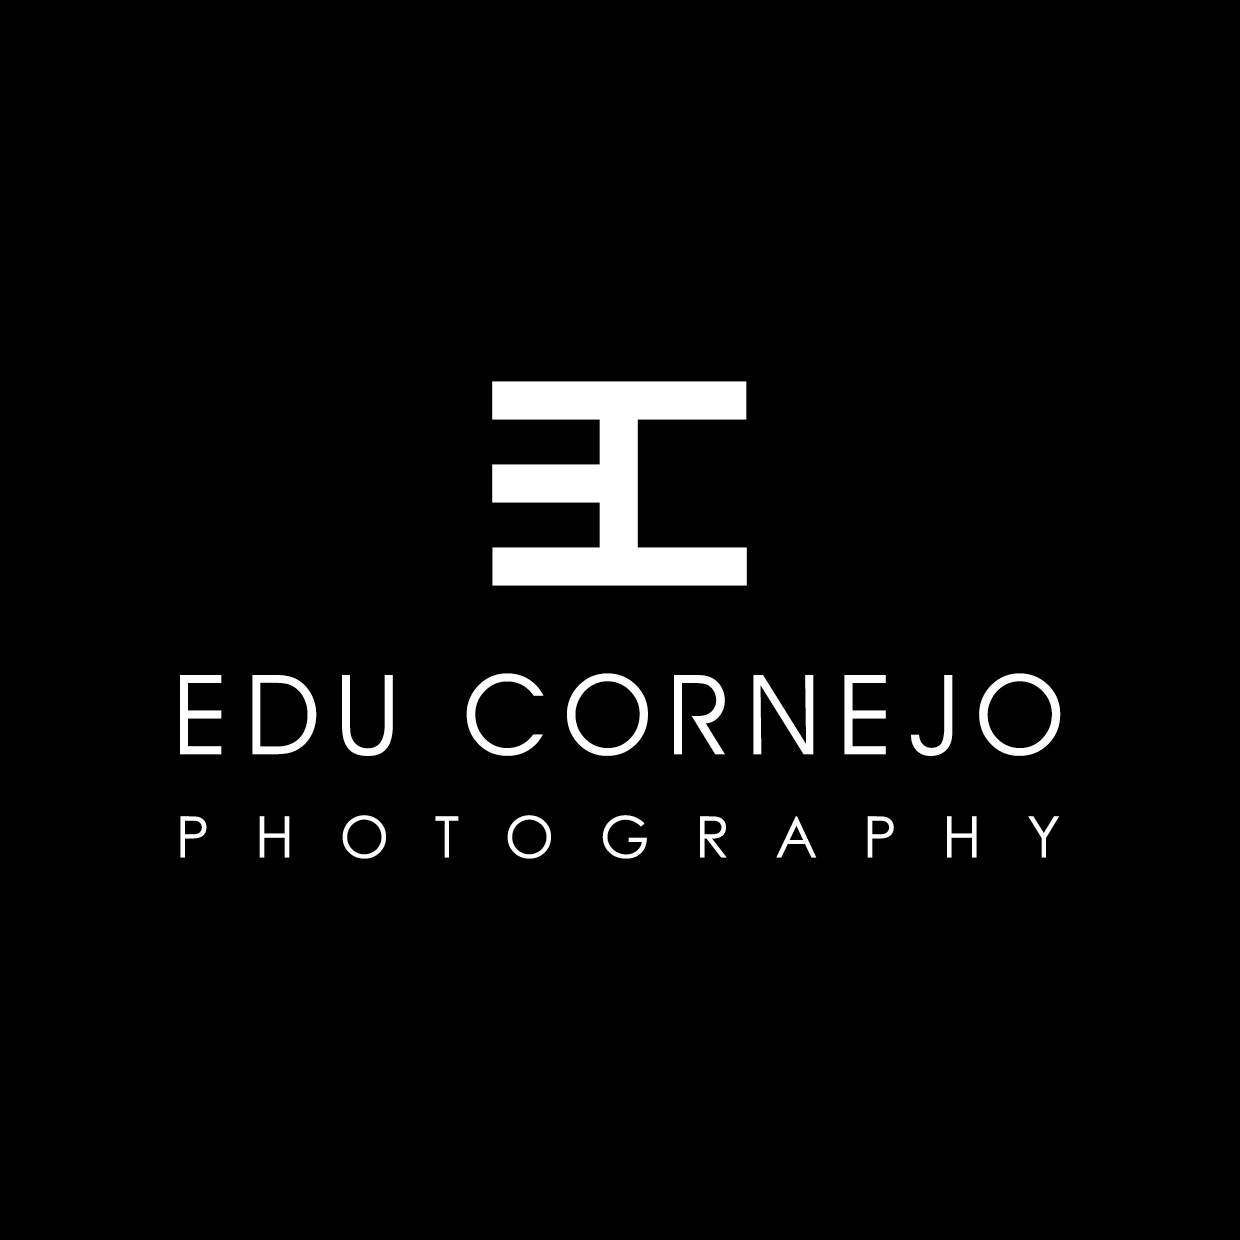 EDU CORNEJO PHOTOGRAPHY